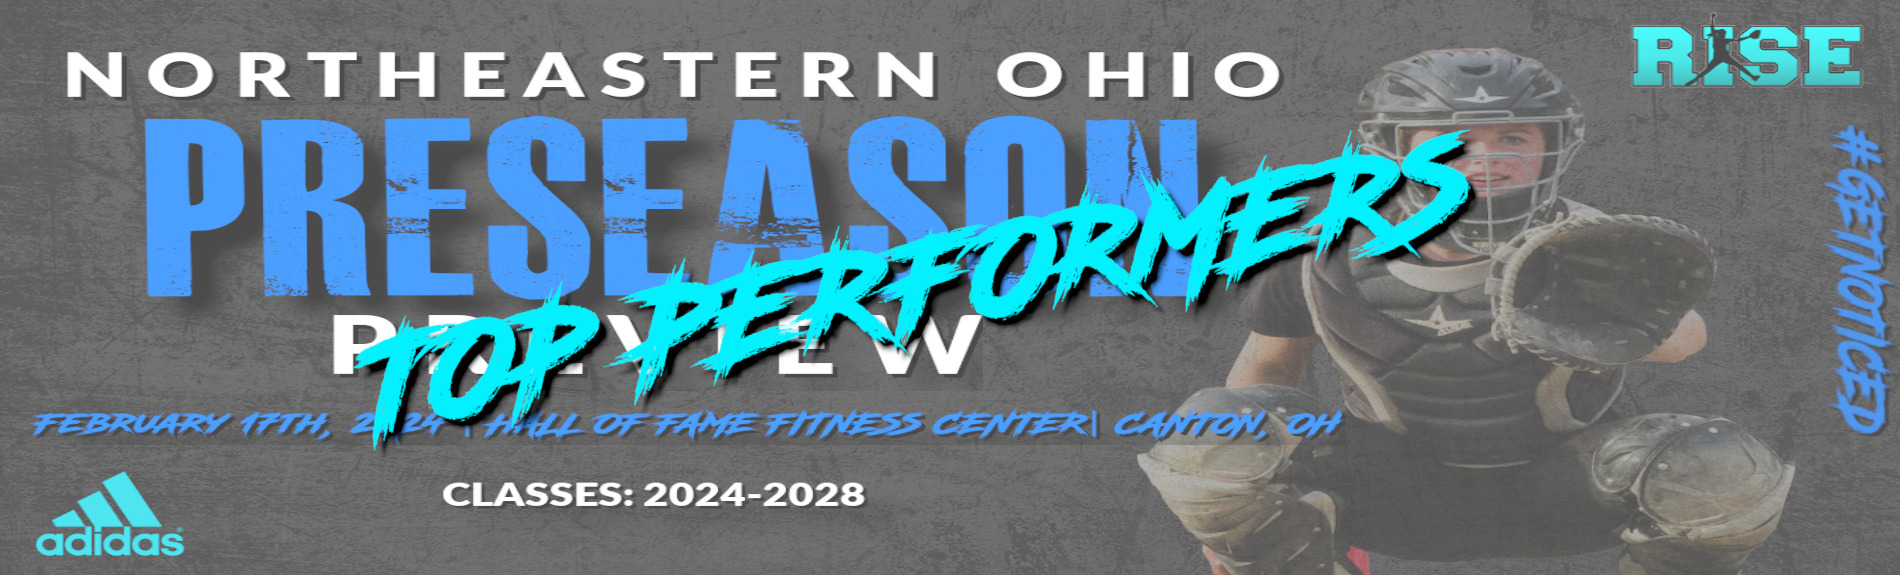 Northeast Ohio Preseason Preview Showcase “TOP PERFORMERS”